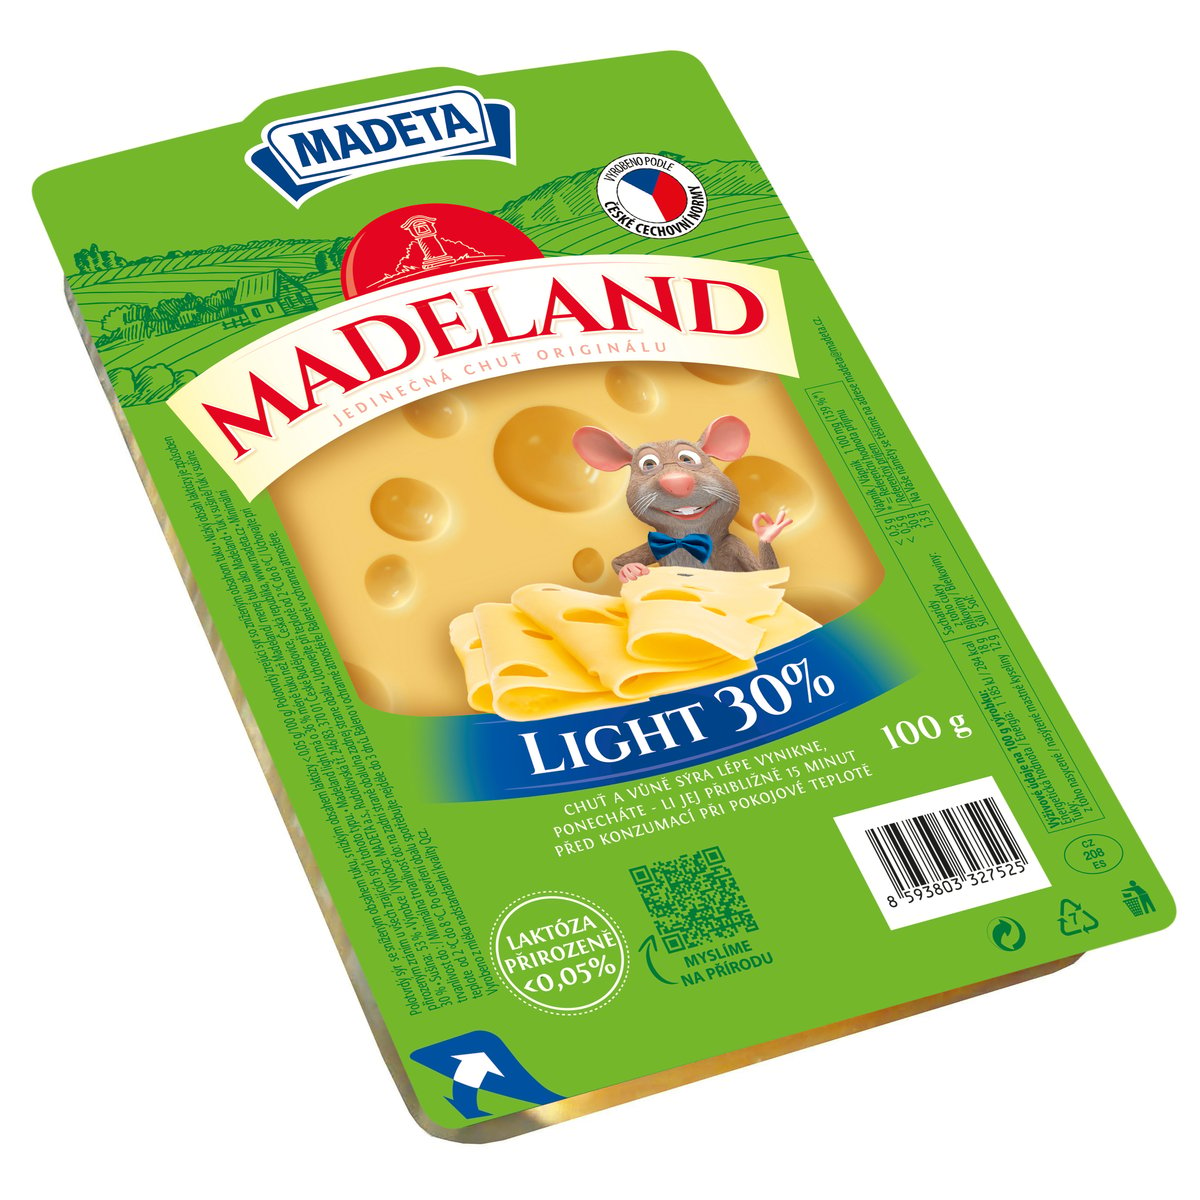 Madeta Madeland light 30% plátky